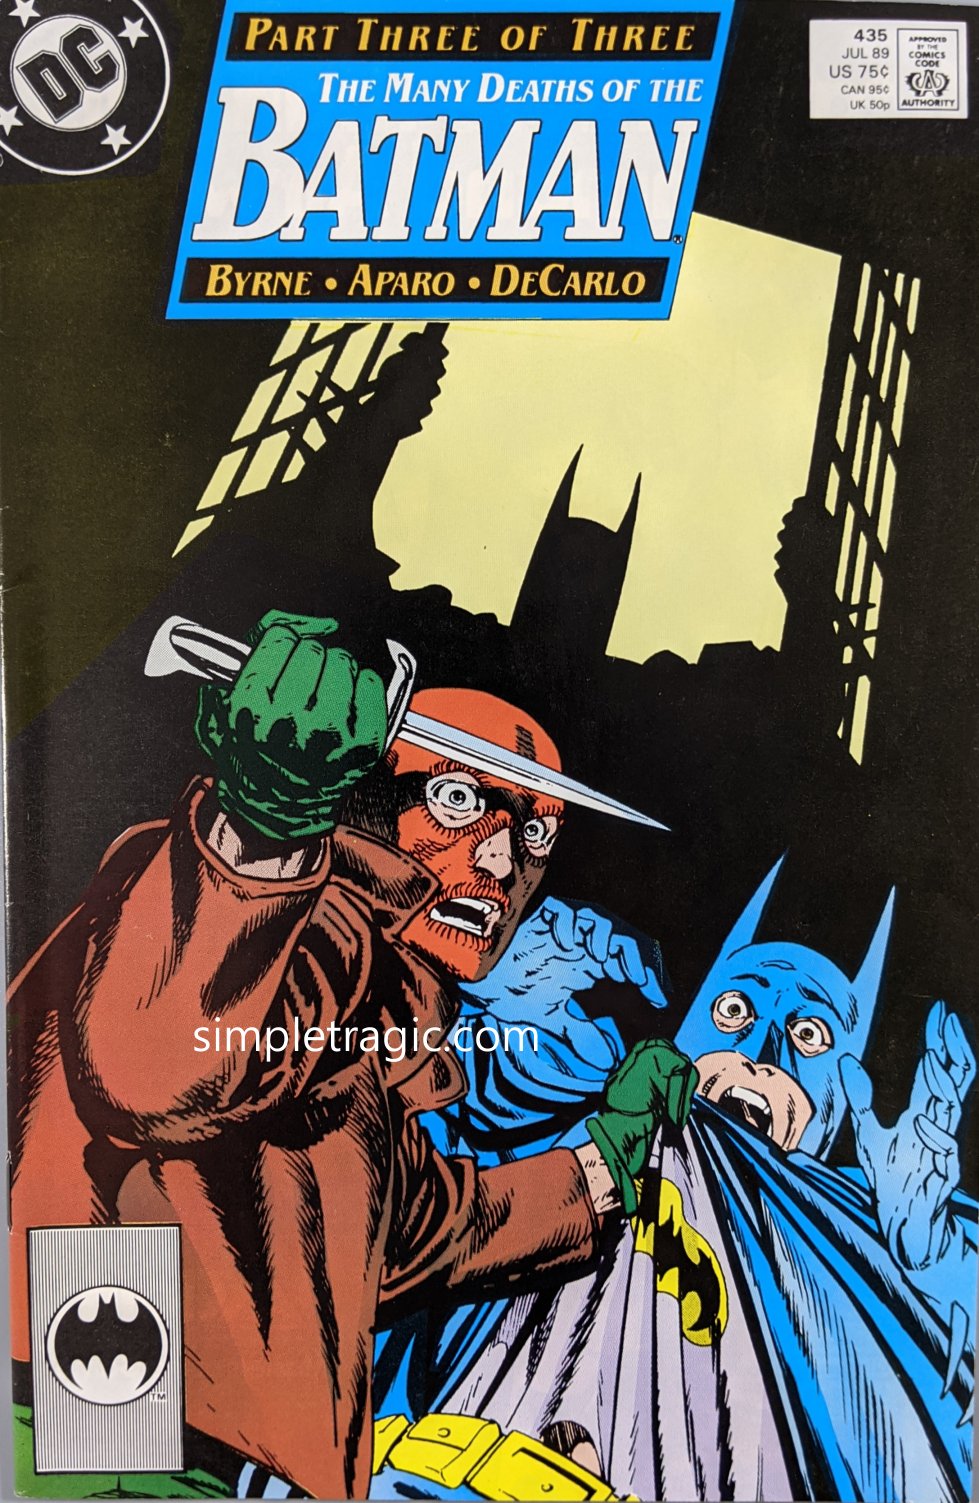 Batman #435 Comic Book Cover Art